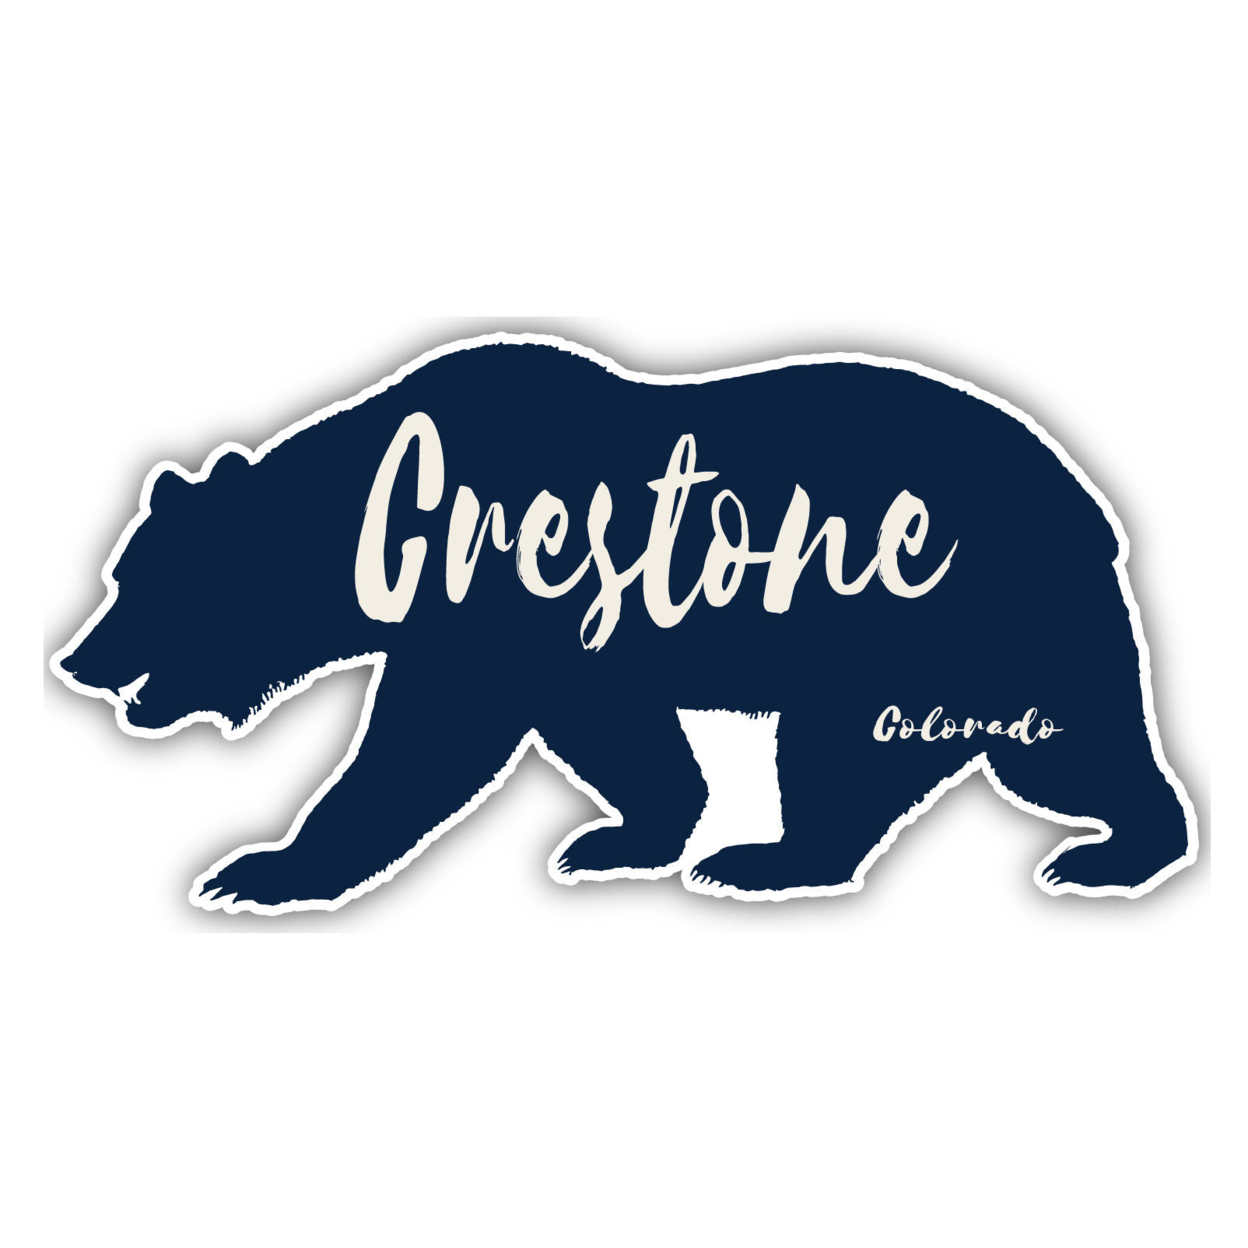 Crestone Colorado Souvenir Decorative Stickers (Choose Theme And Size) - 4-Pack, 2-Inch, Camp Life